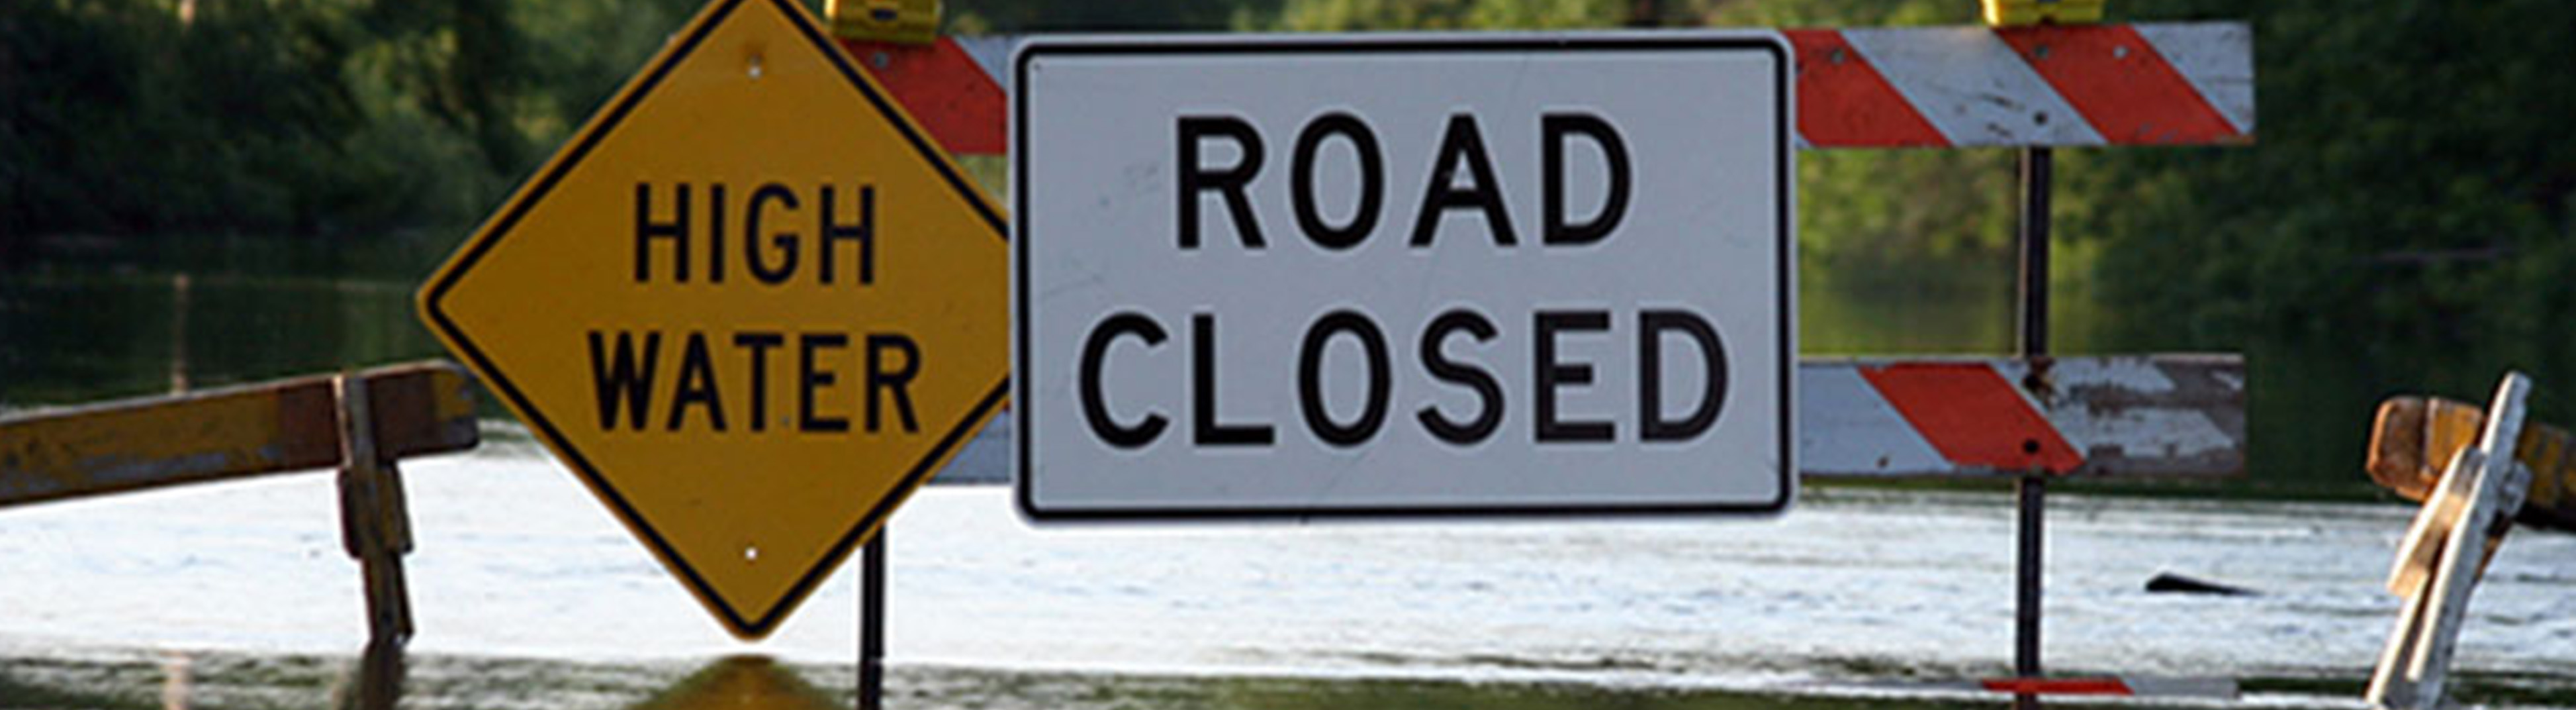 Ohio Flood Insurance coverage